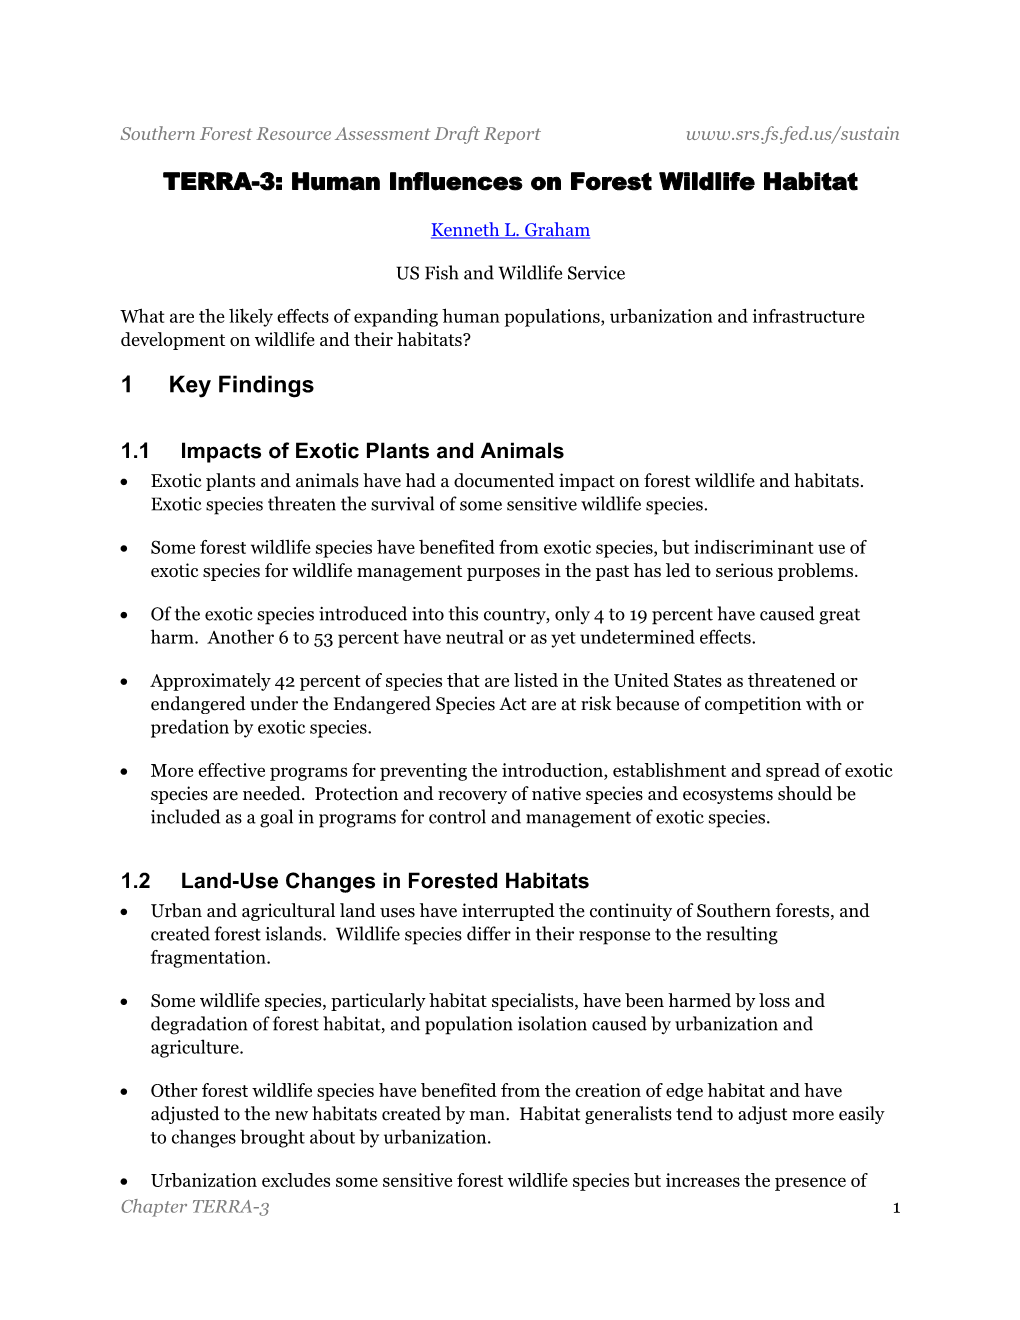 TERRA-3: Human Influences on Forest Wildlife Habitat